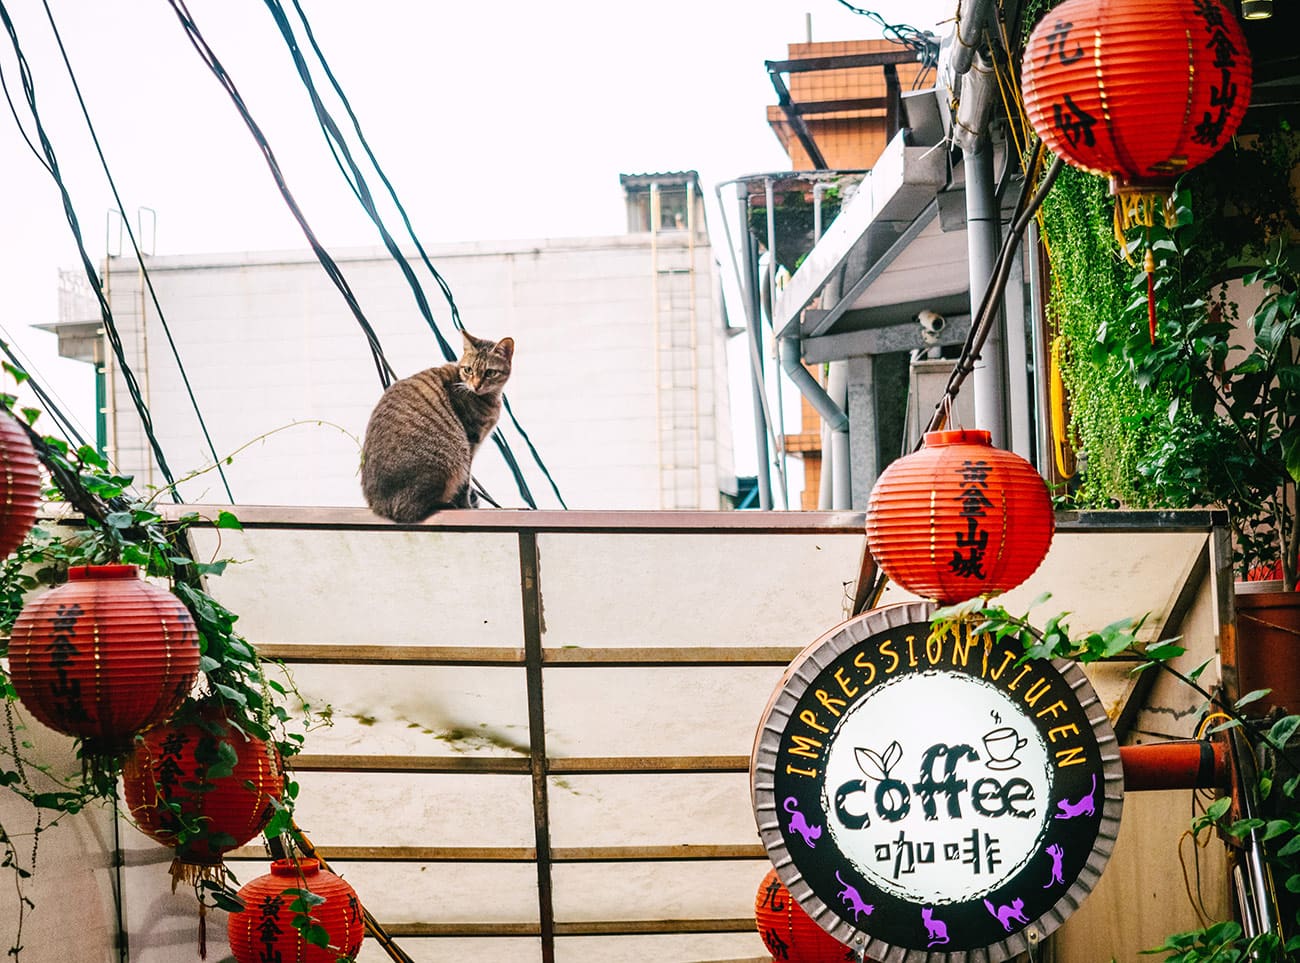 Taipei Jiufen - Cat on the roof